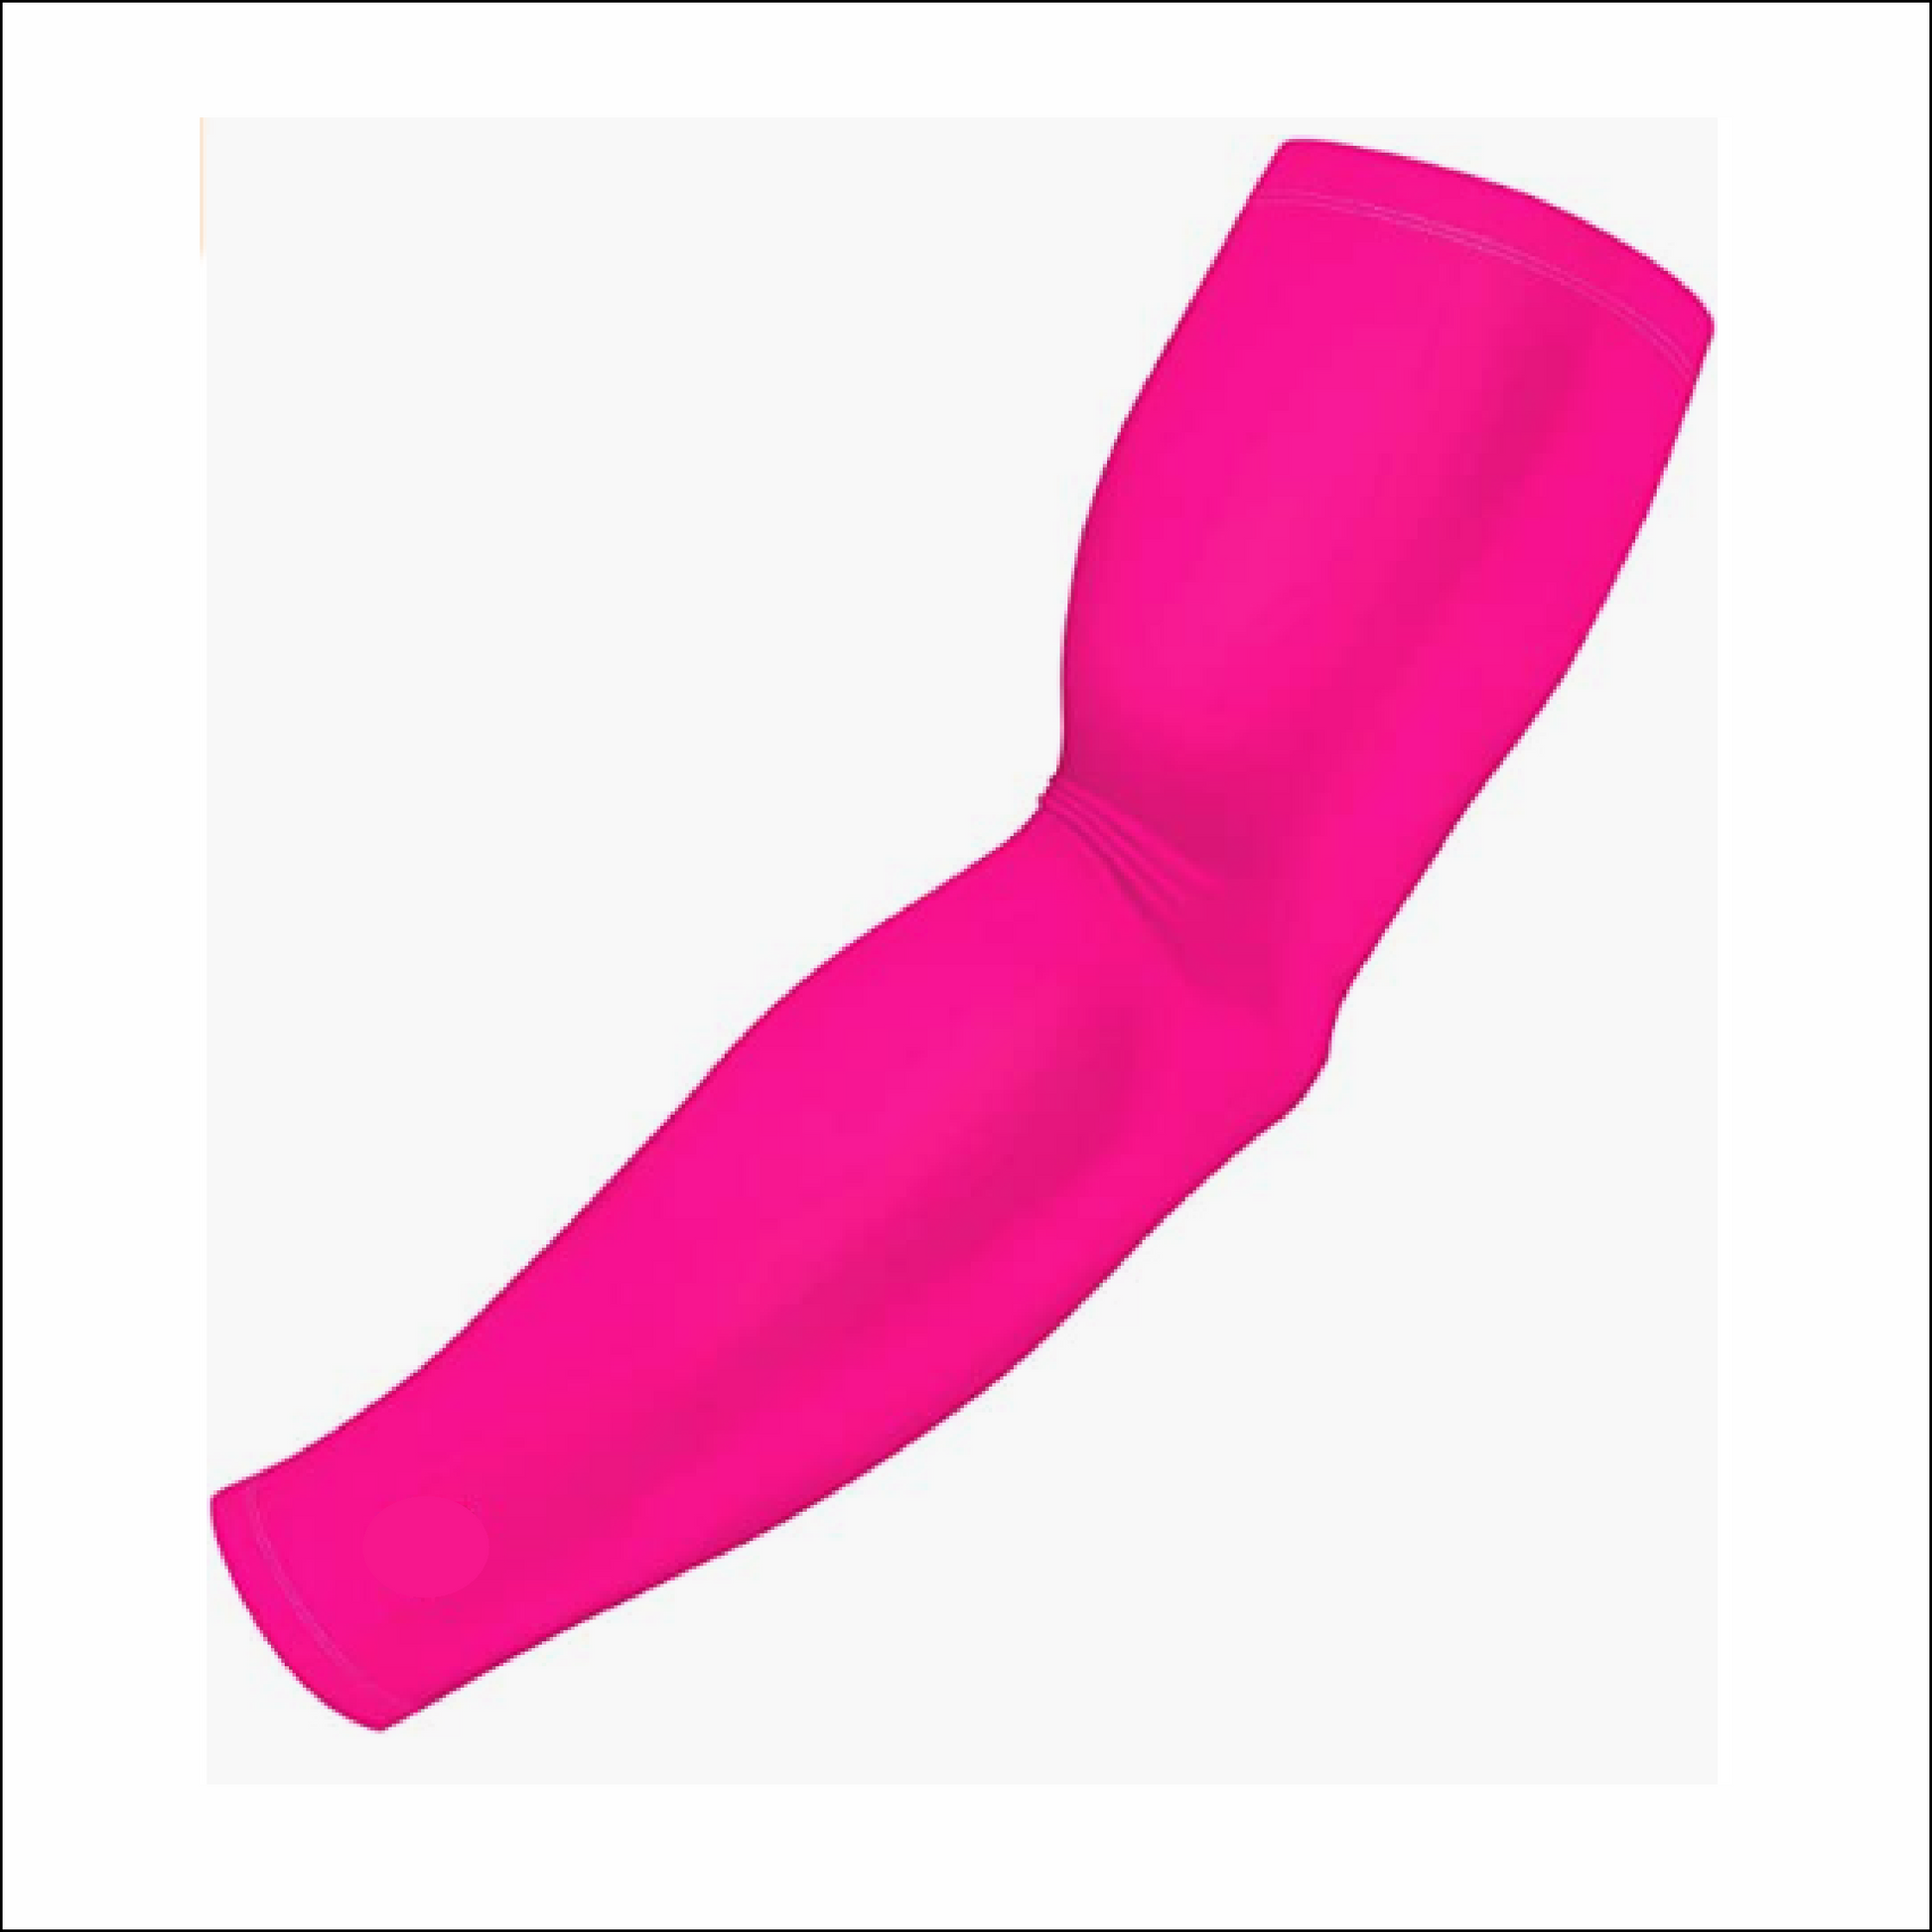 Hot pink arm sleeve â cic custom products apparel